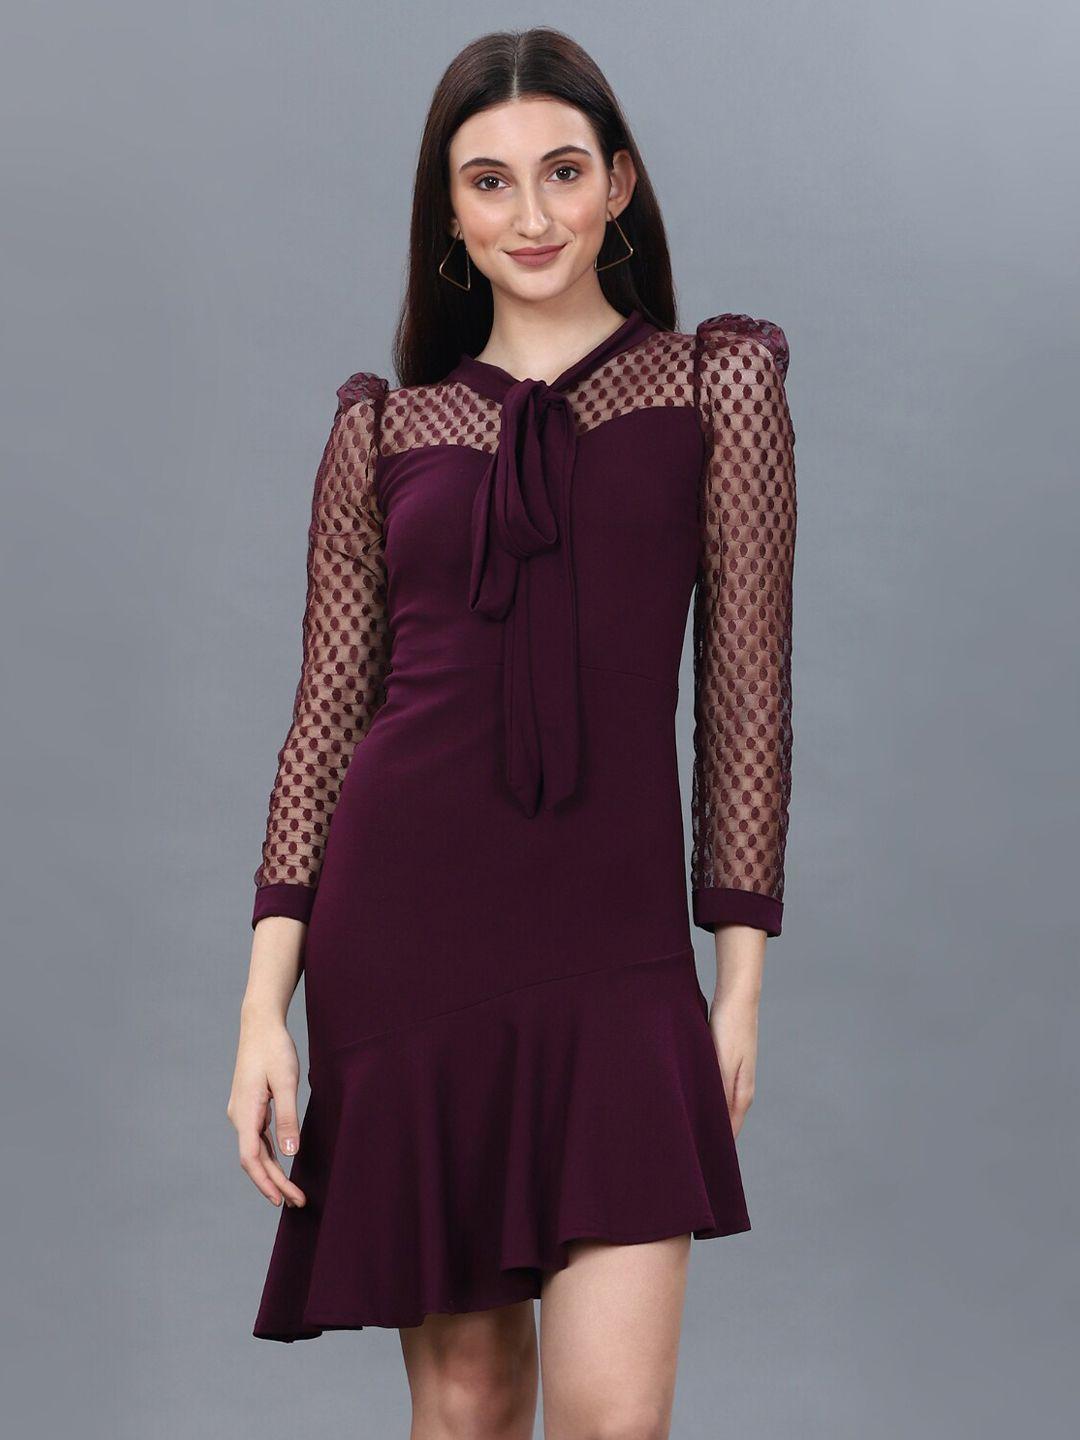 westhood purple tie-up neck fit & flare dress